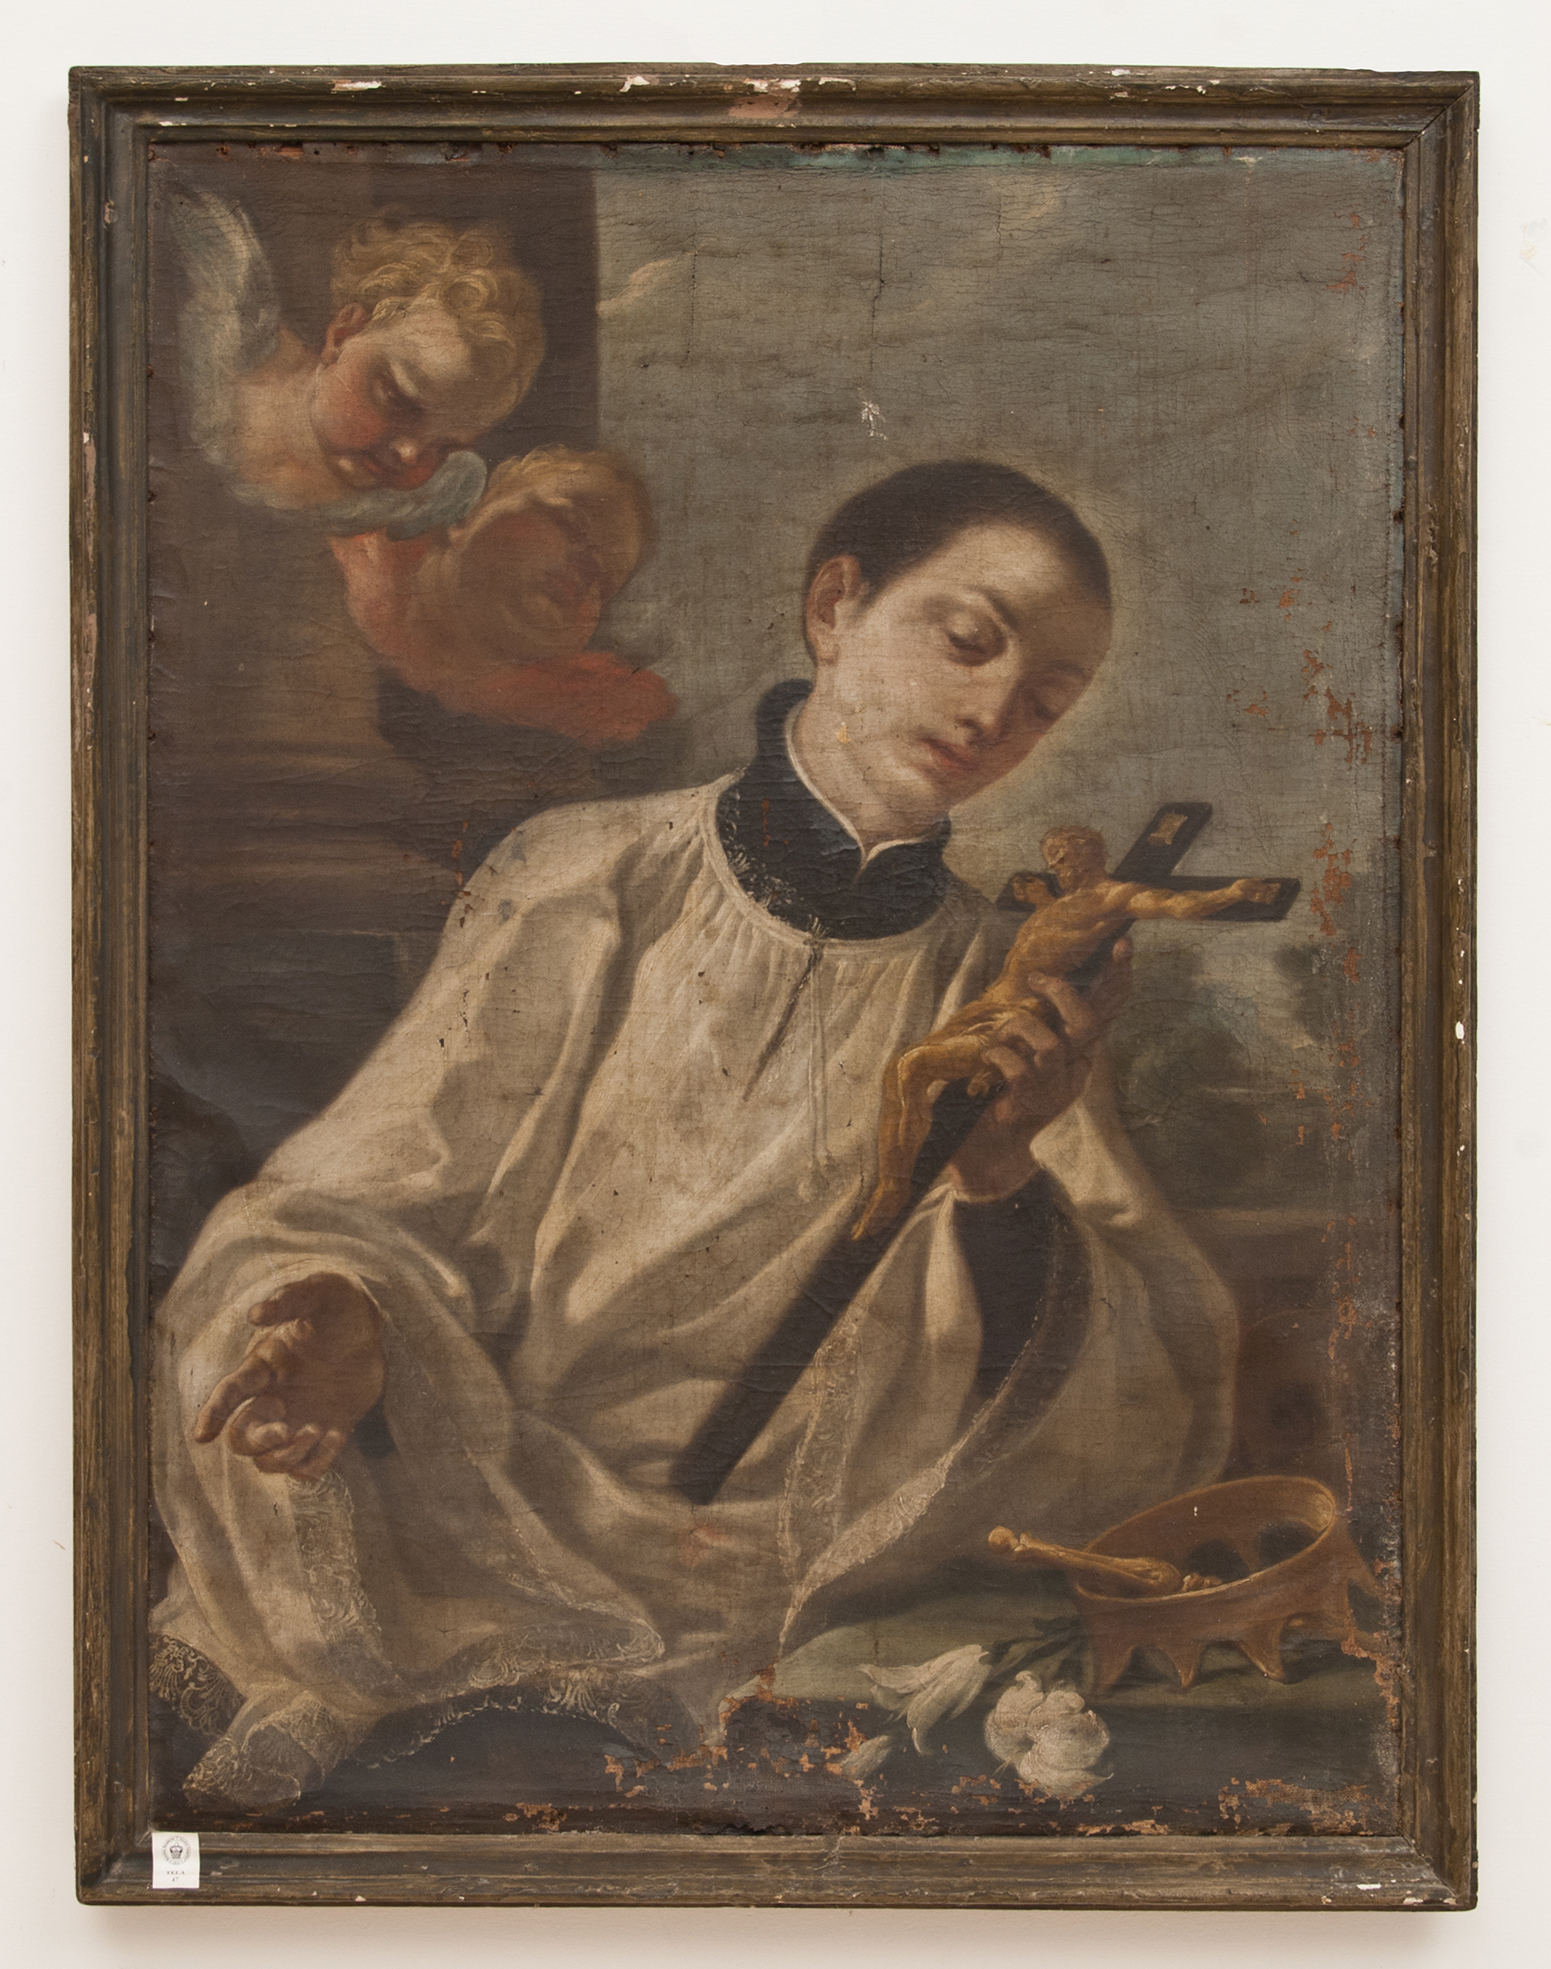 SAN LUIGI GONZAGA (dipinto - dipinto su tela, opera isolata) di Ignoto (maniera) - ambito Italia meridionale (XVIII)